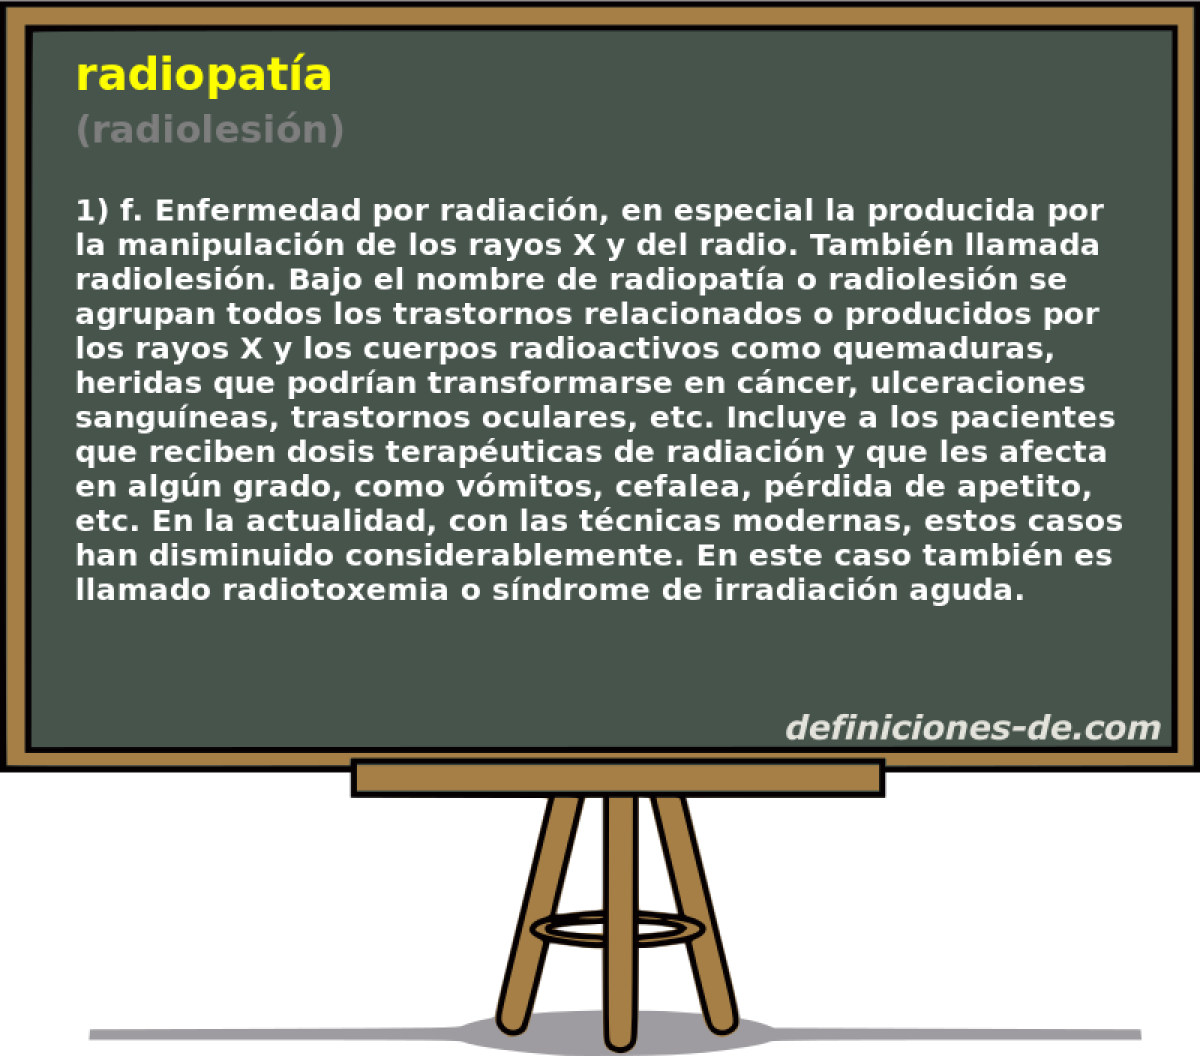 radiopata (radiolesin)